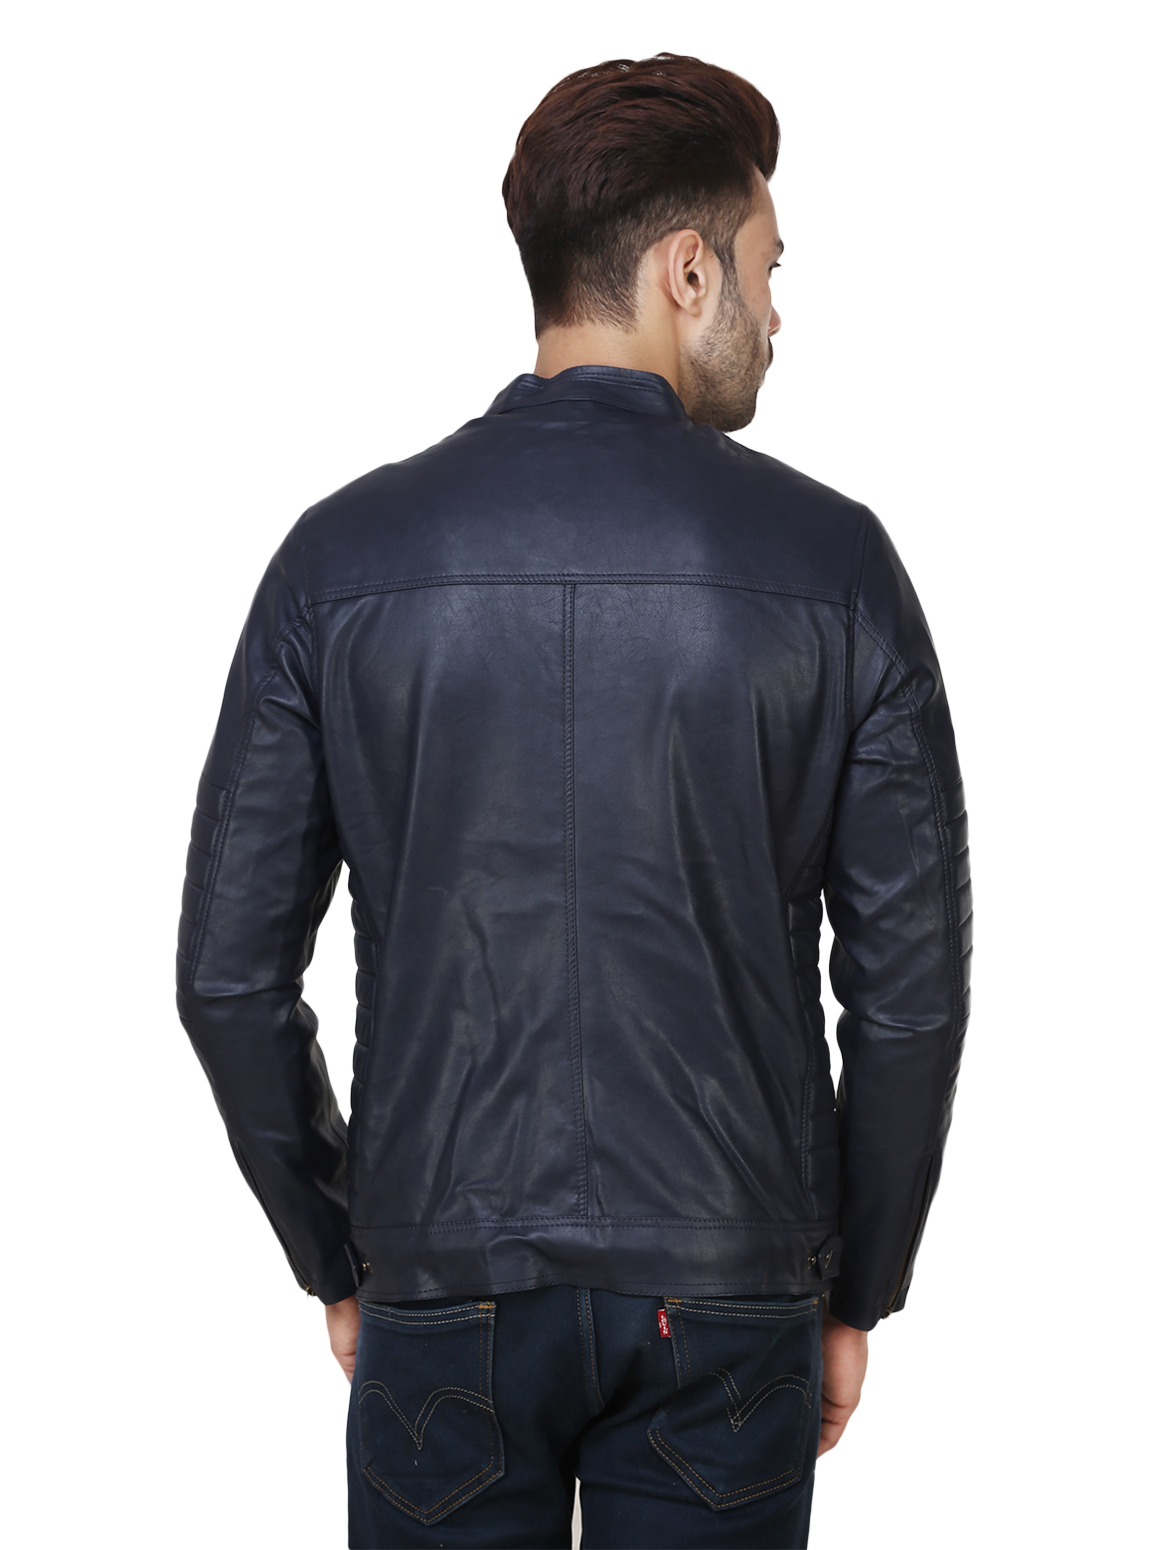 Buy Pu Leather Plain Biker Casual Jacket For Boys Men Online @ ₹2289